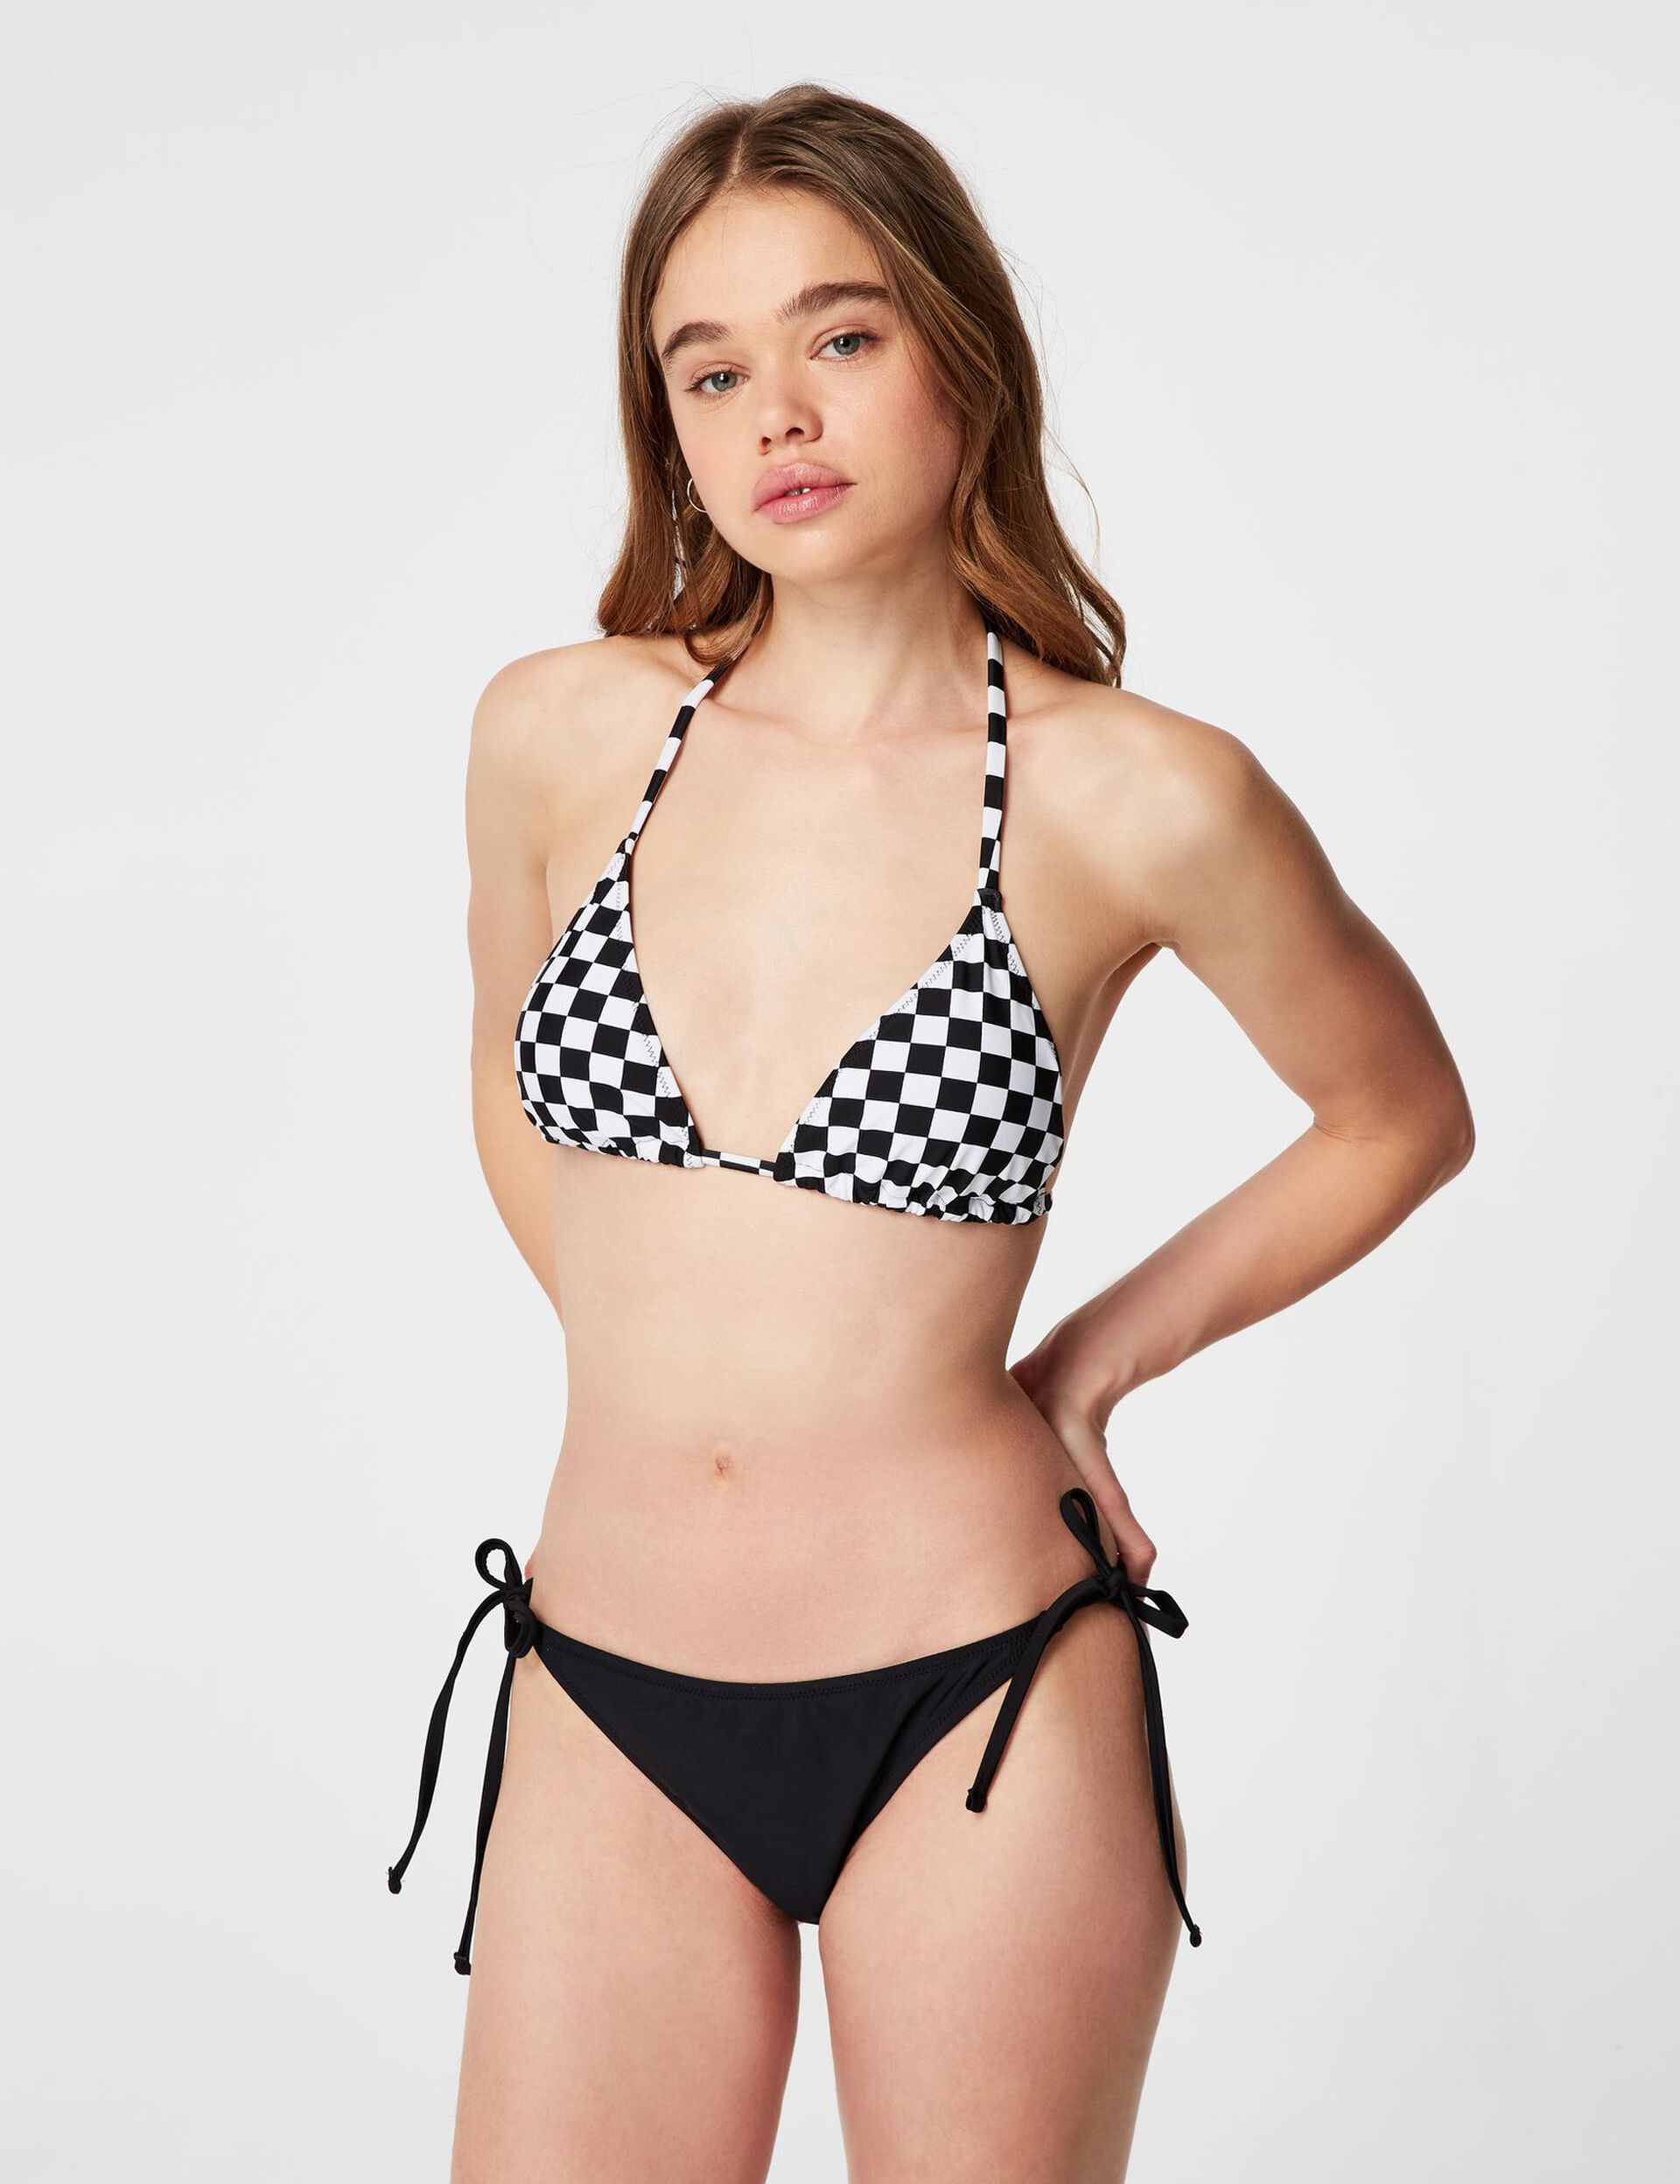 Checkerboard bikini top